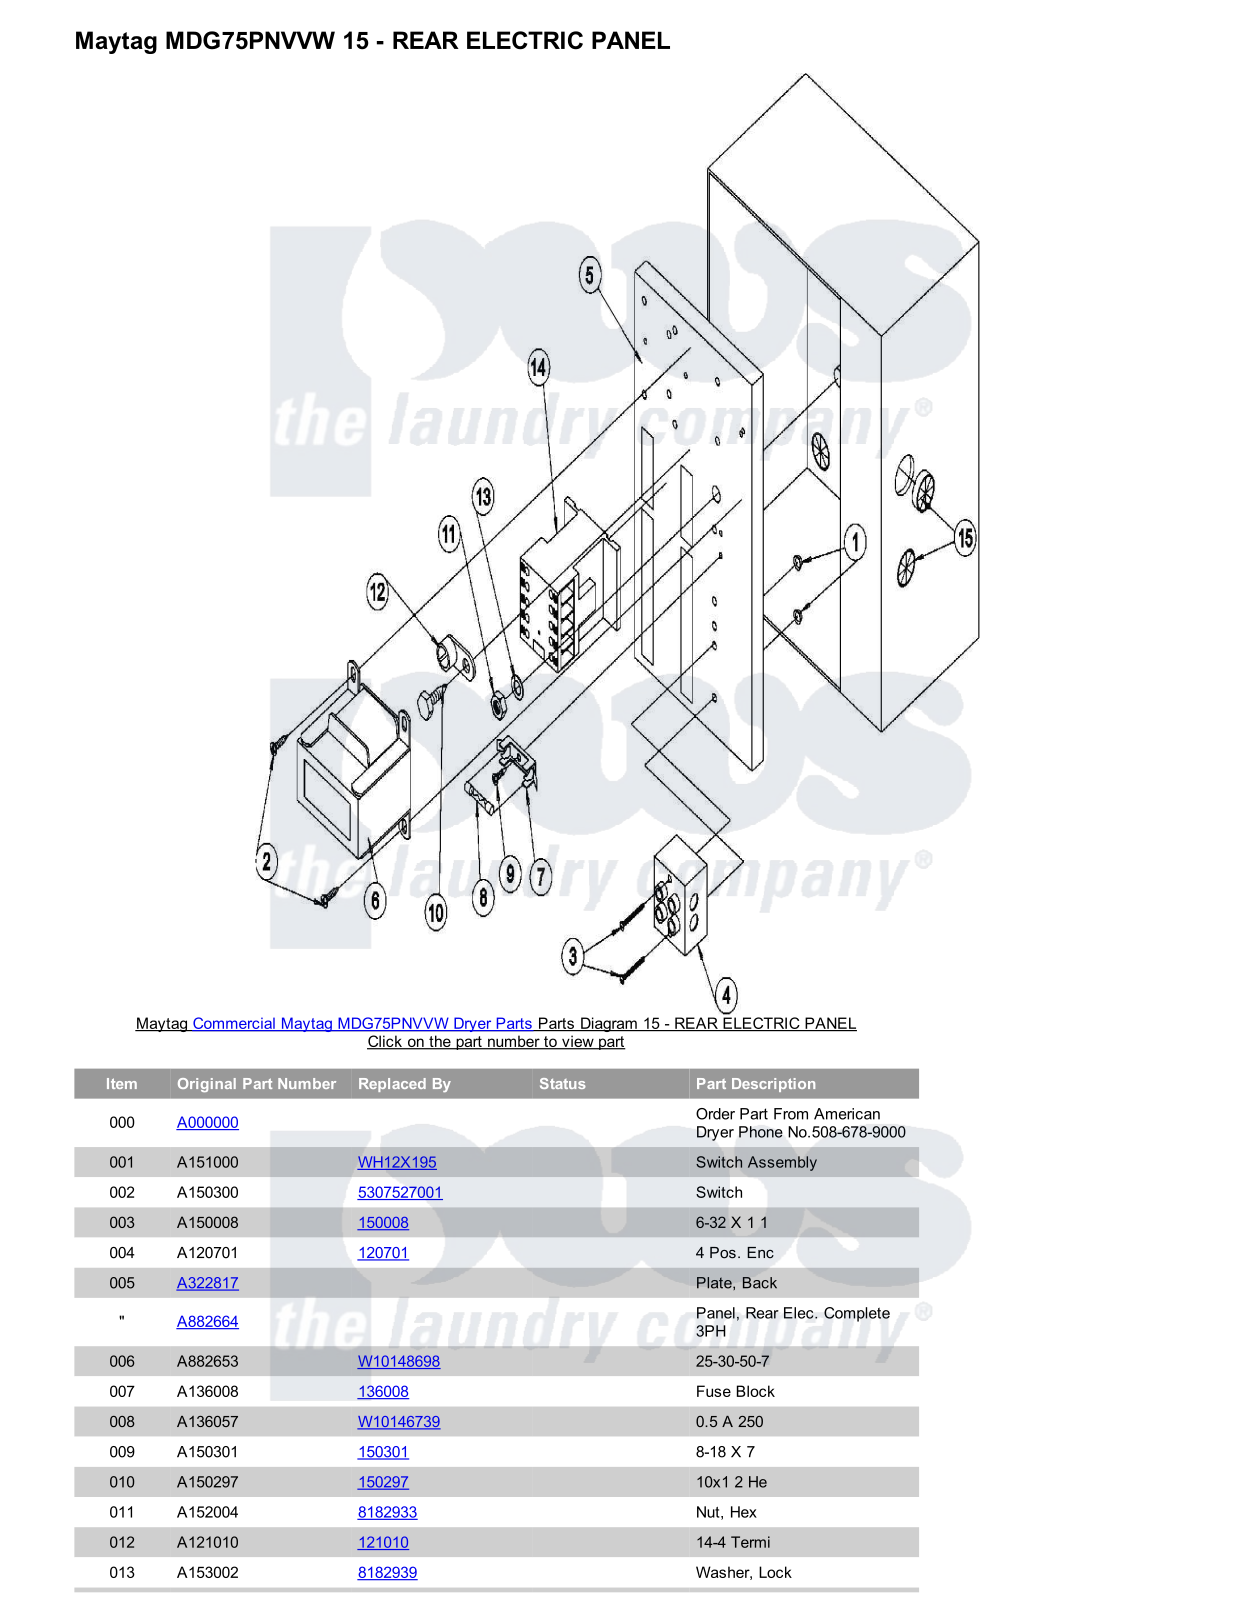 Maytag MDG75PNVVW Parts Diagram